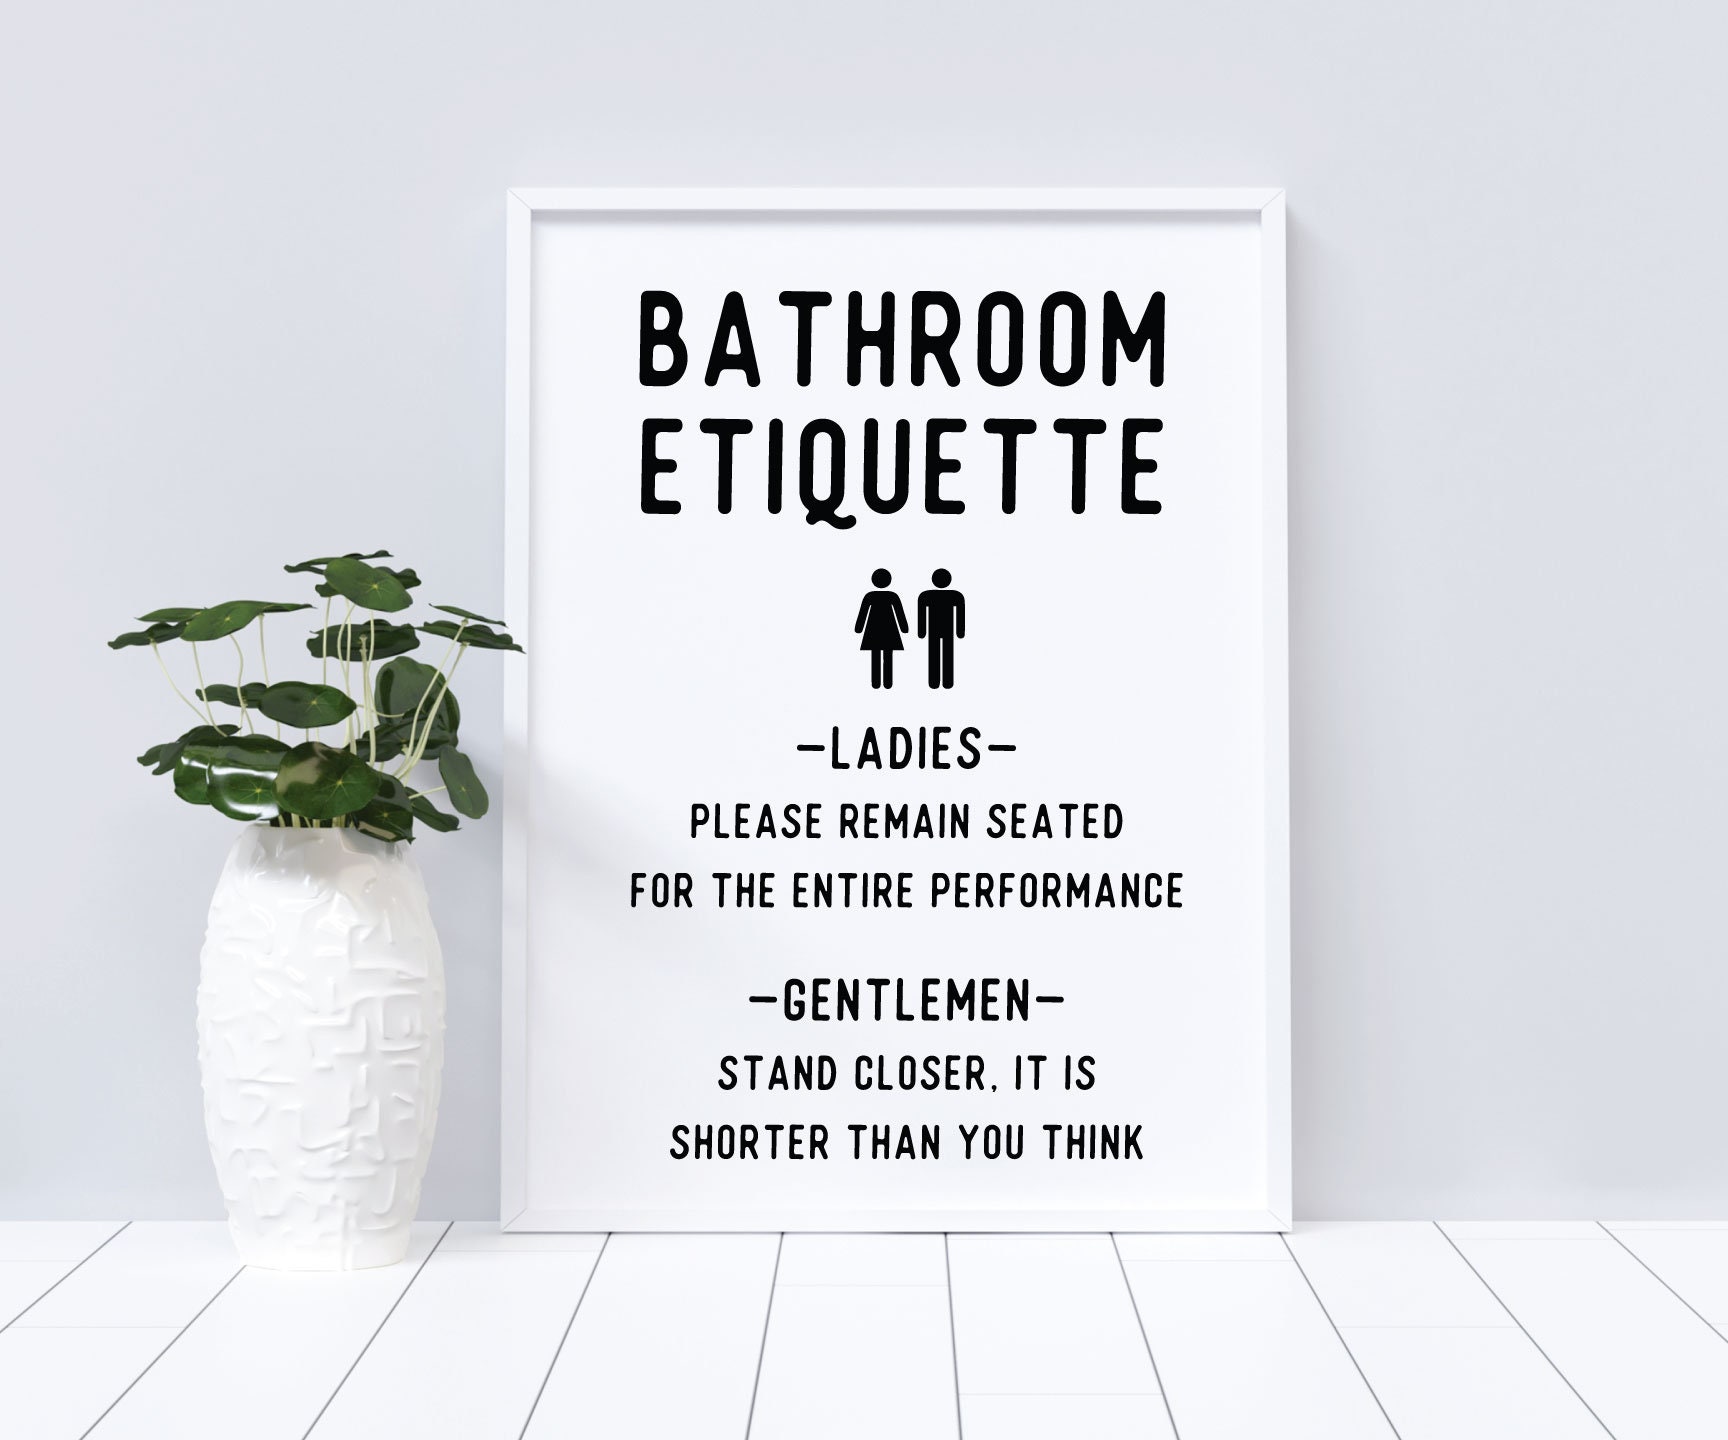 Classic Archive Feature Bathroom Etiquette